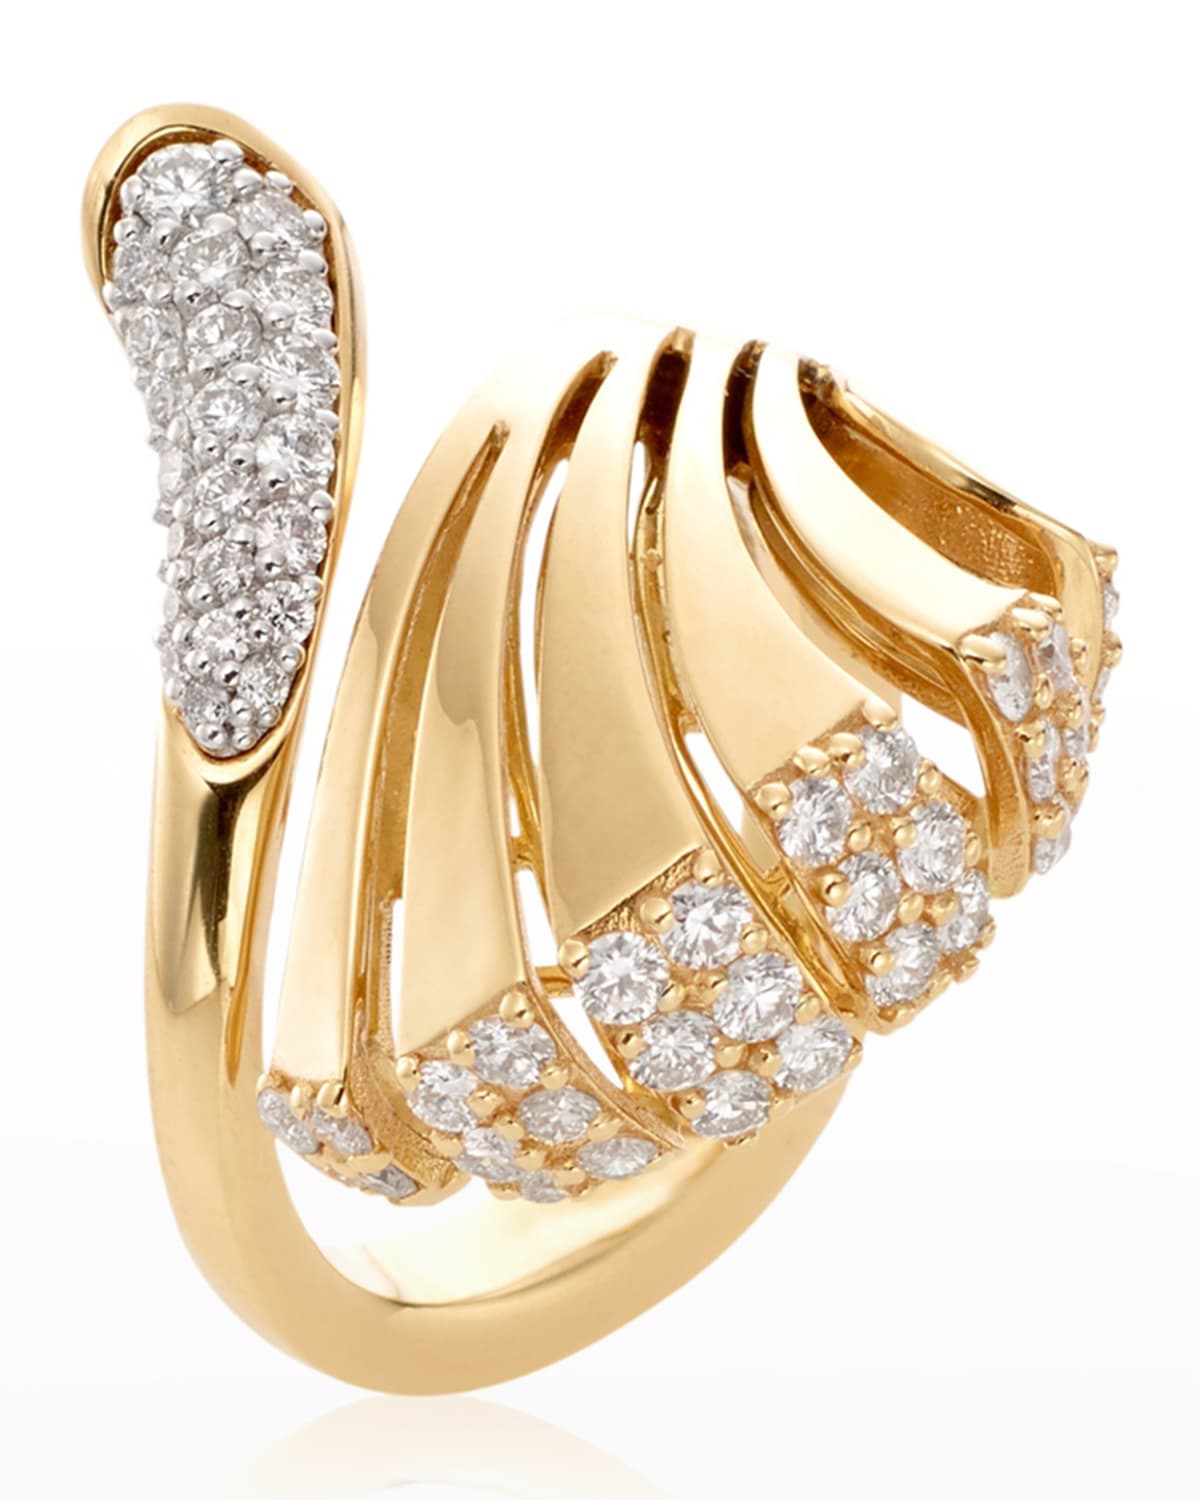 Ventaglio 18k Gold Diamond Fan Ring, Size 6